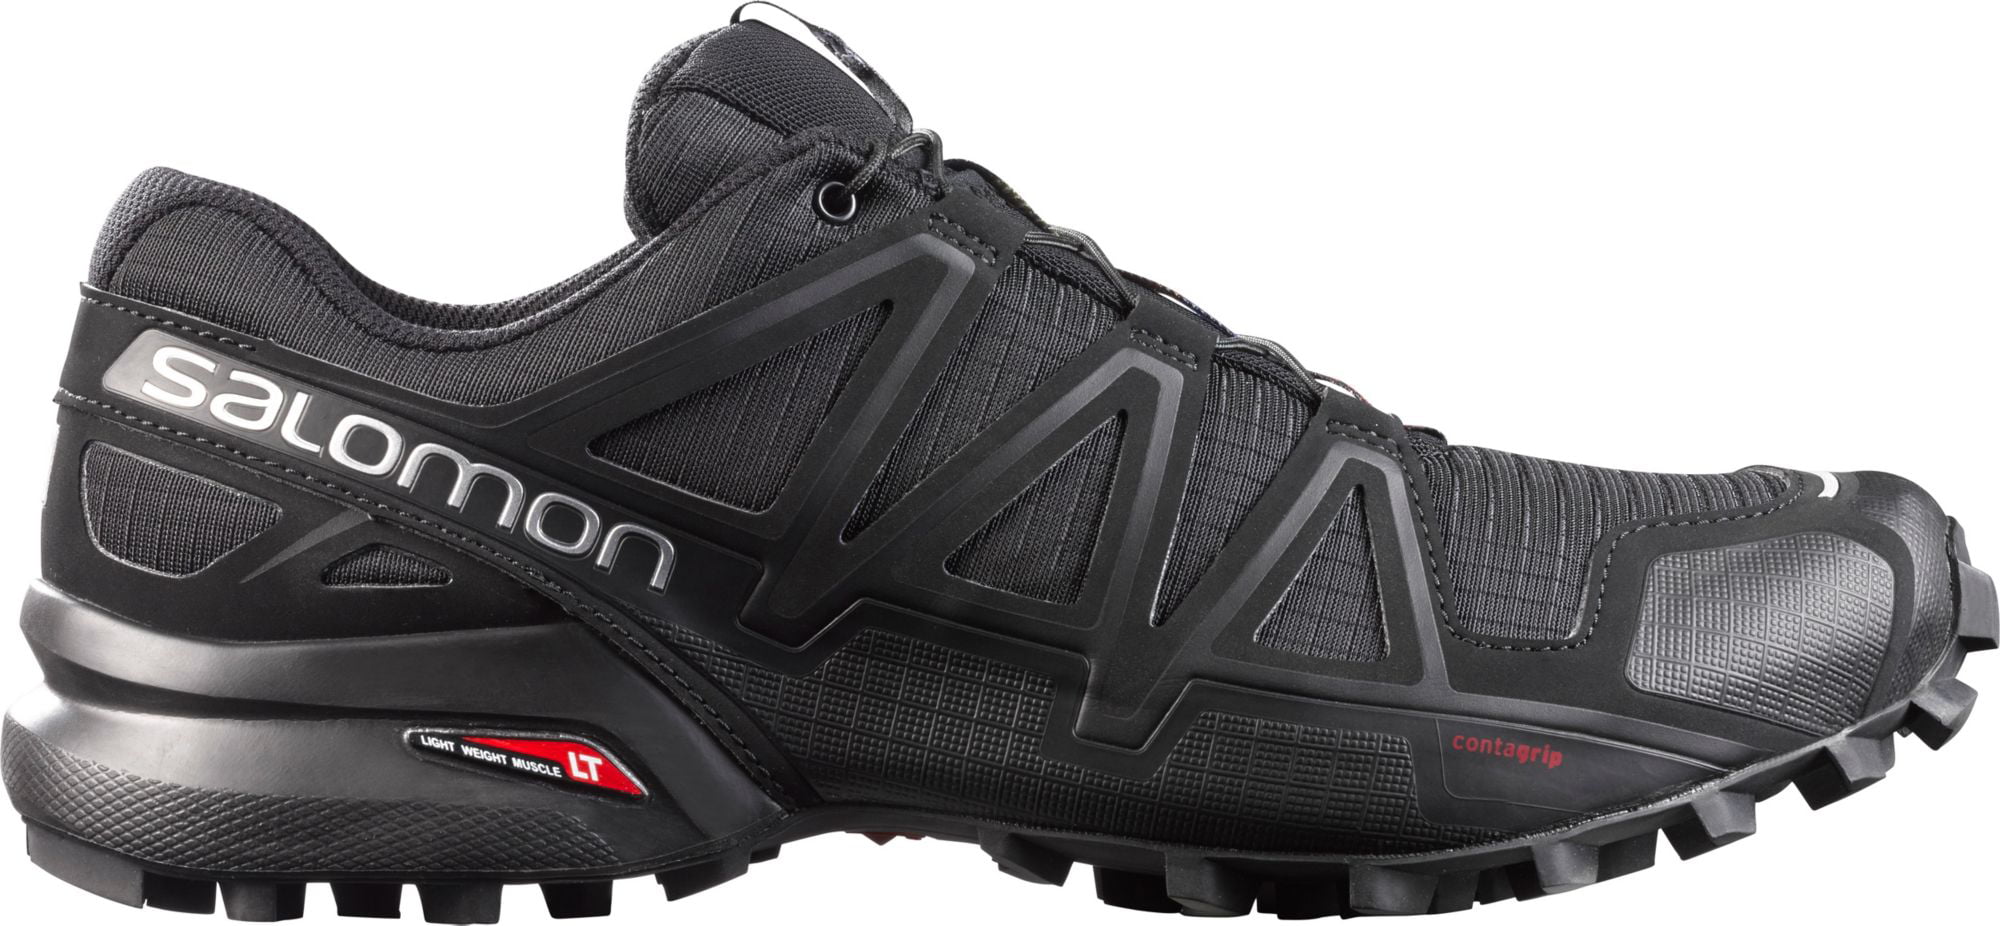 Salomon Mens Speedcross 4 Trail Running Shoes Black Black/Black/Black Metallic 8.5 UK 